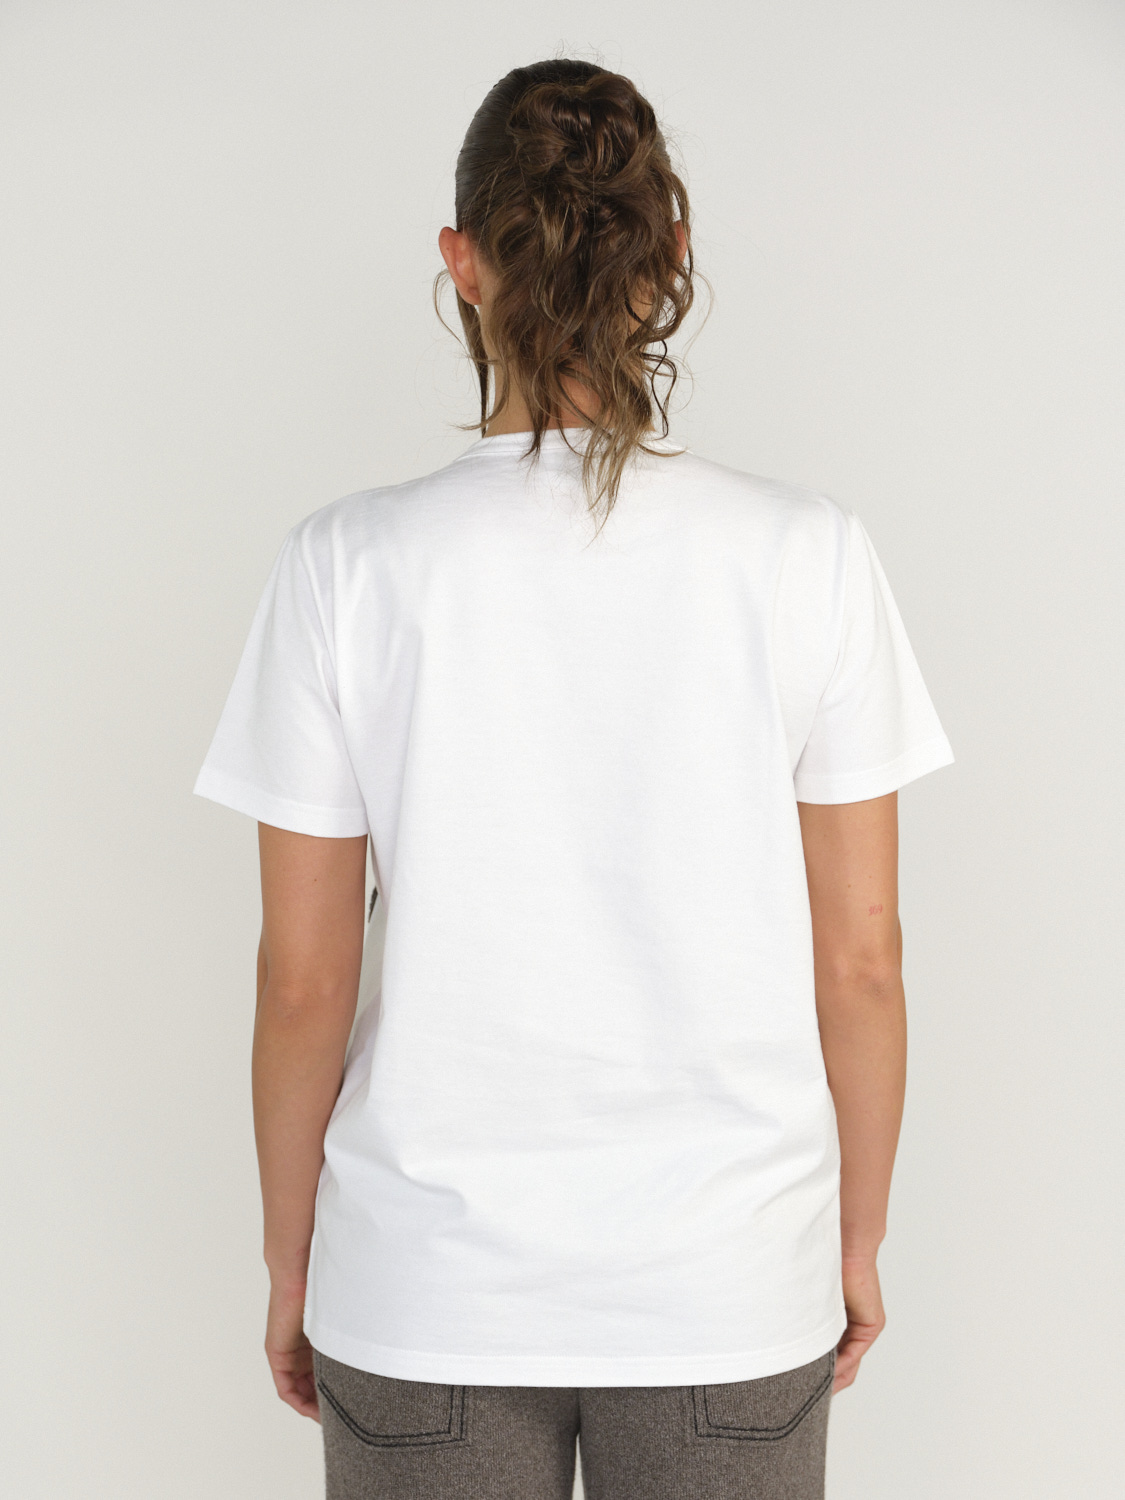 Barrie Barrie - Cardo - Camiseta con parche del logotipo beige XS